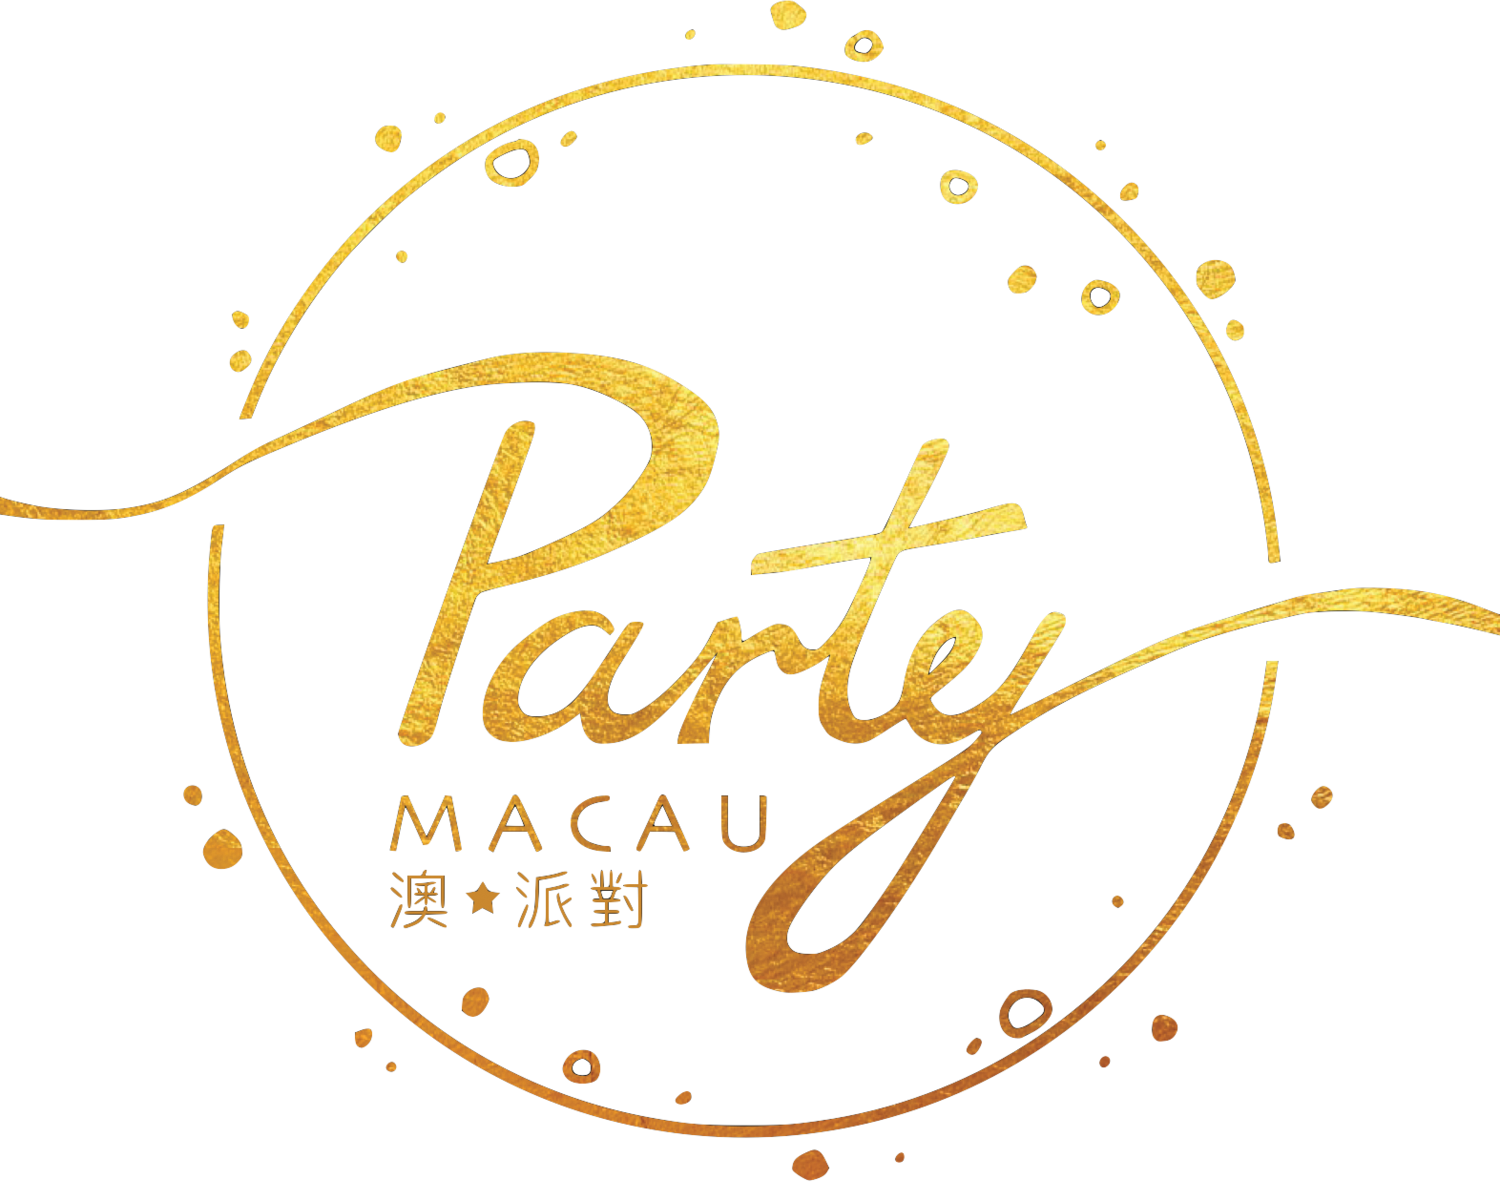 Party Macau